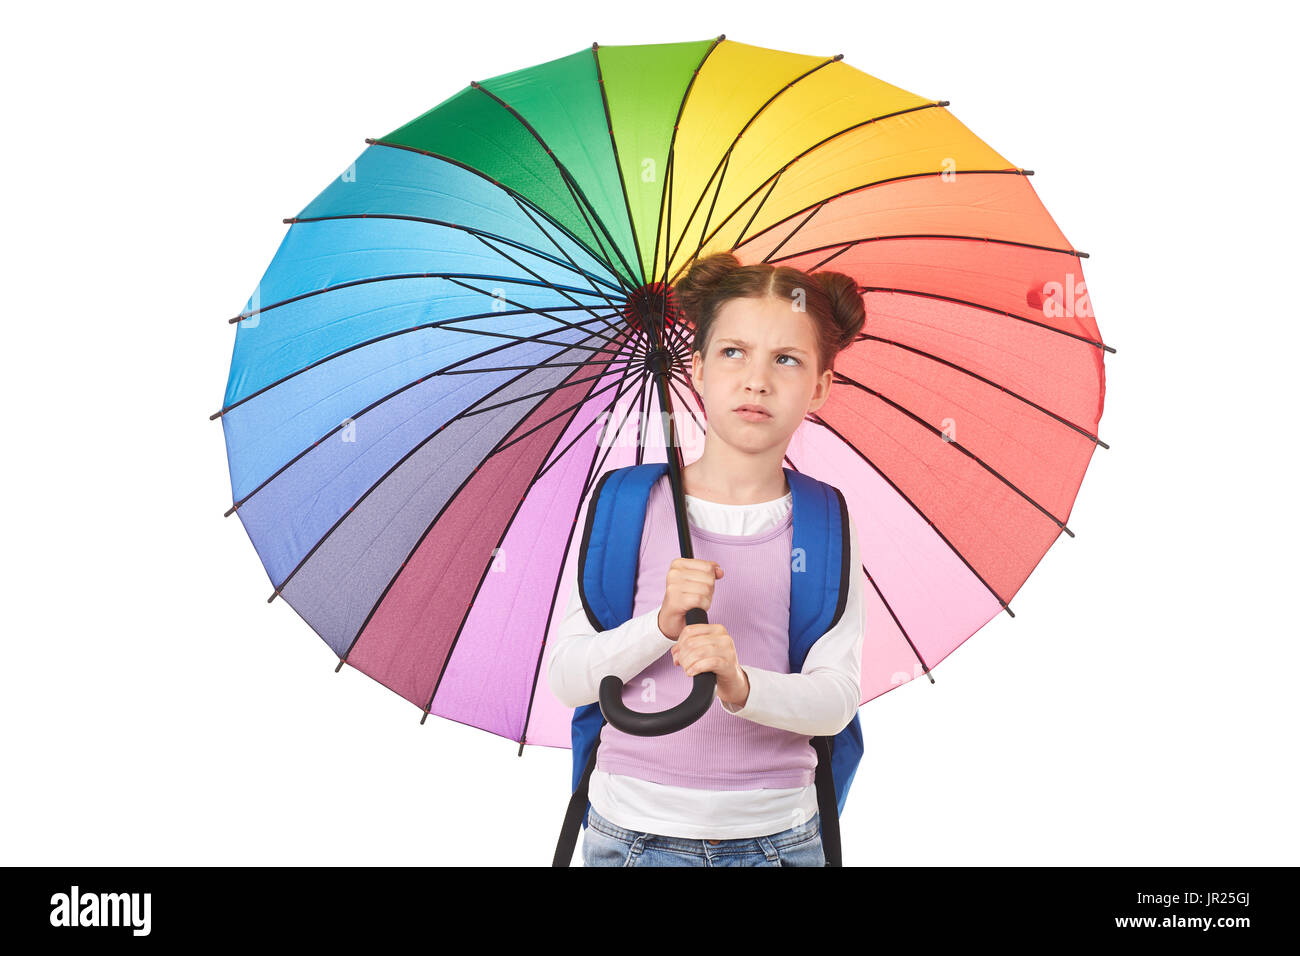 School girl under umbrella Stock Photo